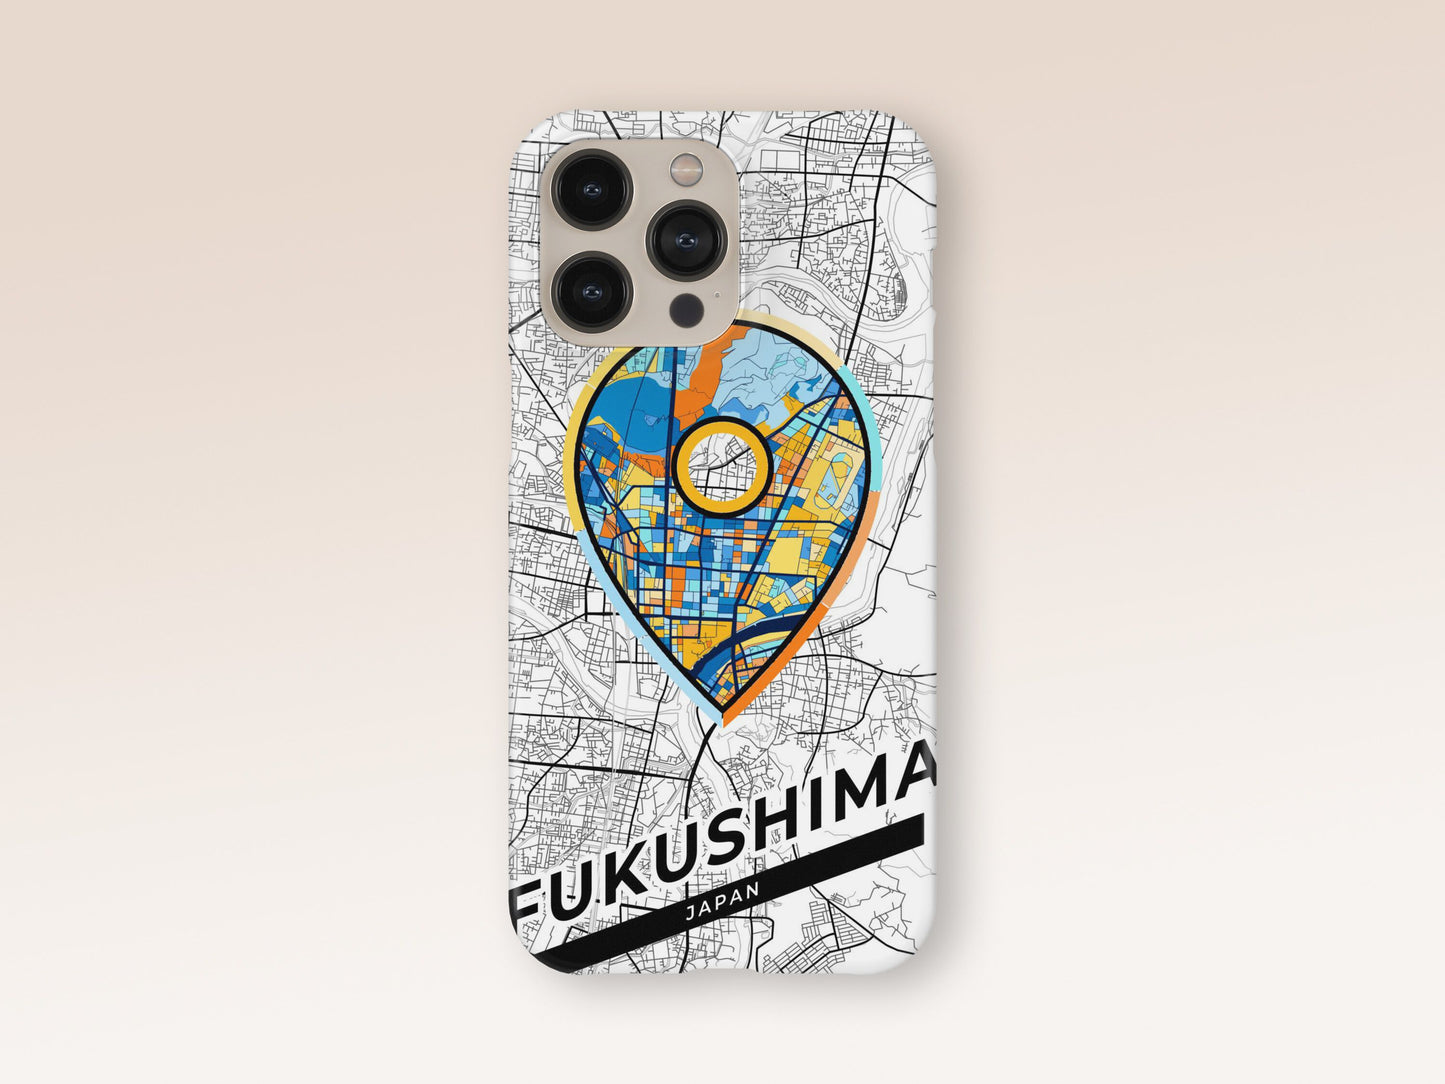 Fukushima Japan slim phone case with colorful icon. Birthday, wedding or housewarming gift. Couple match cases. 1